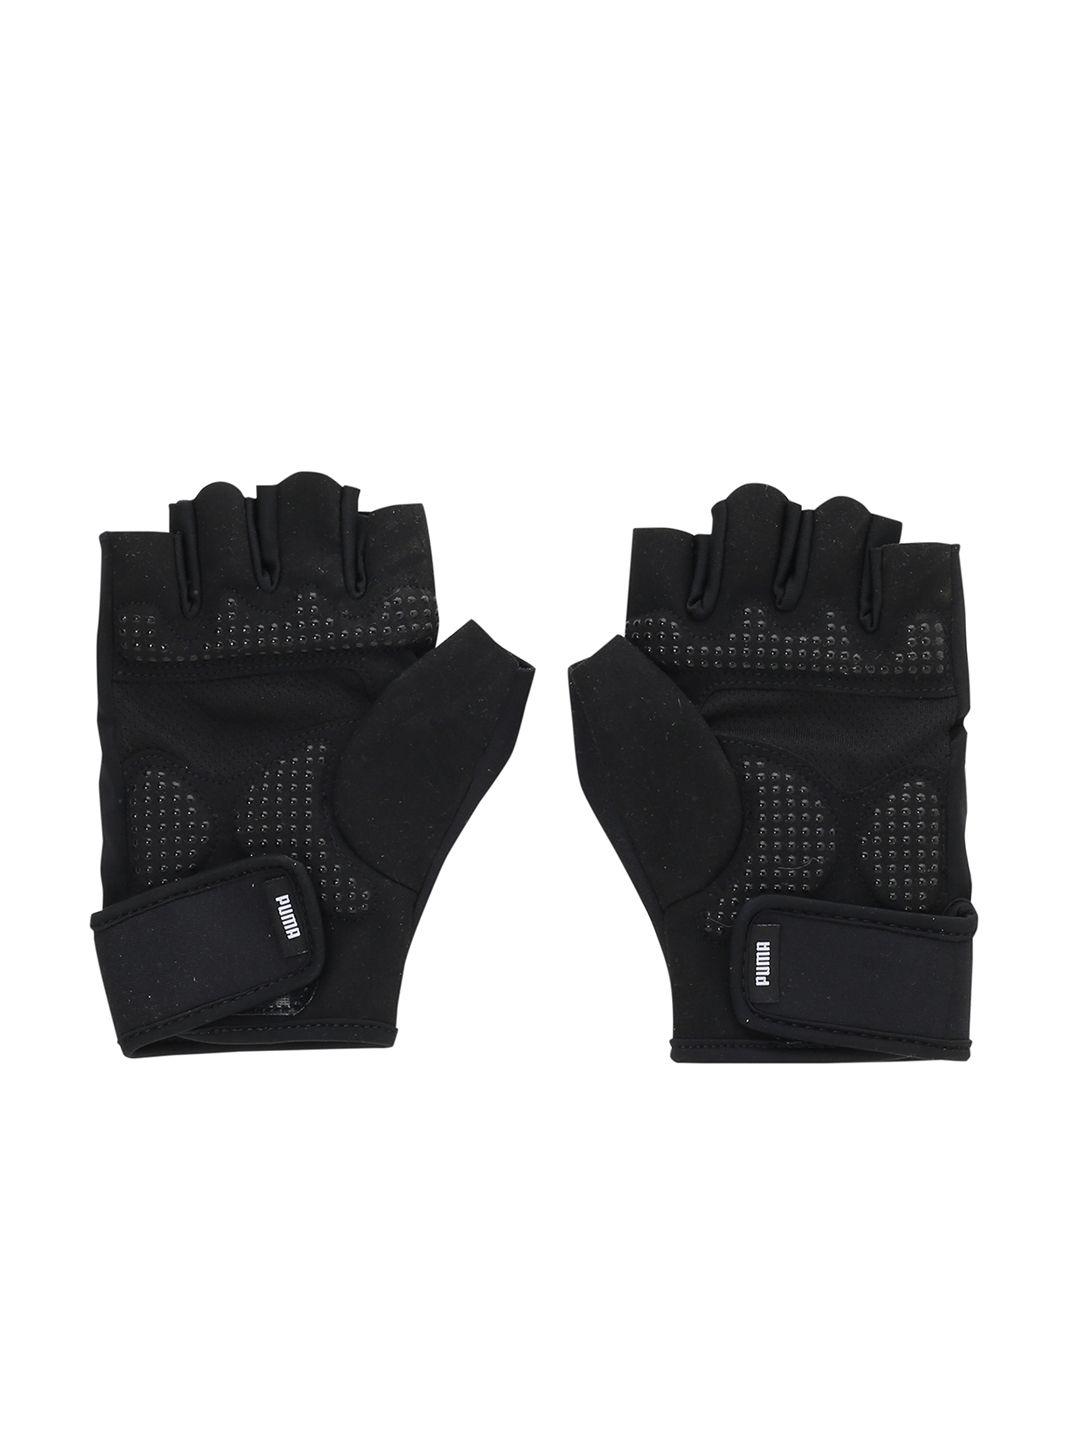 puma-unisex-black-tr-ess-gloves